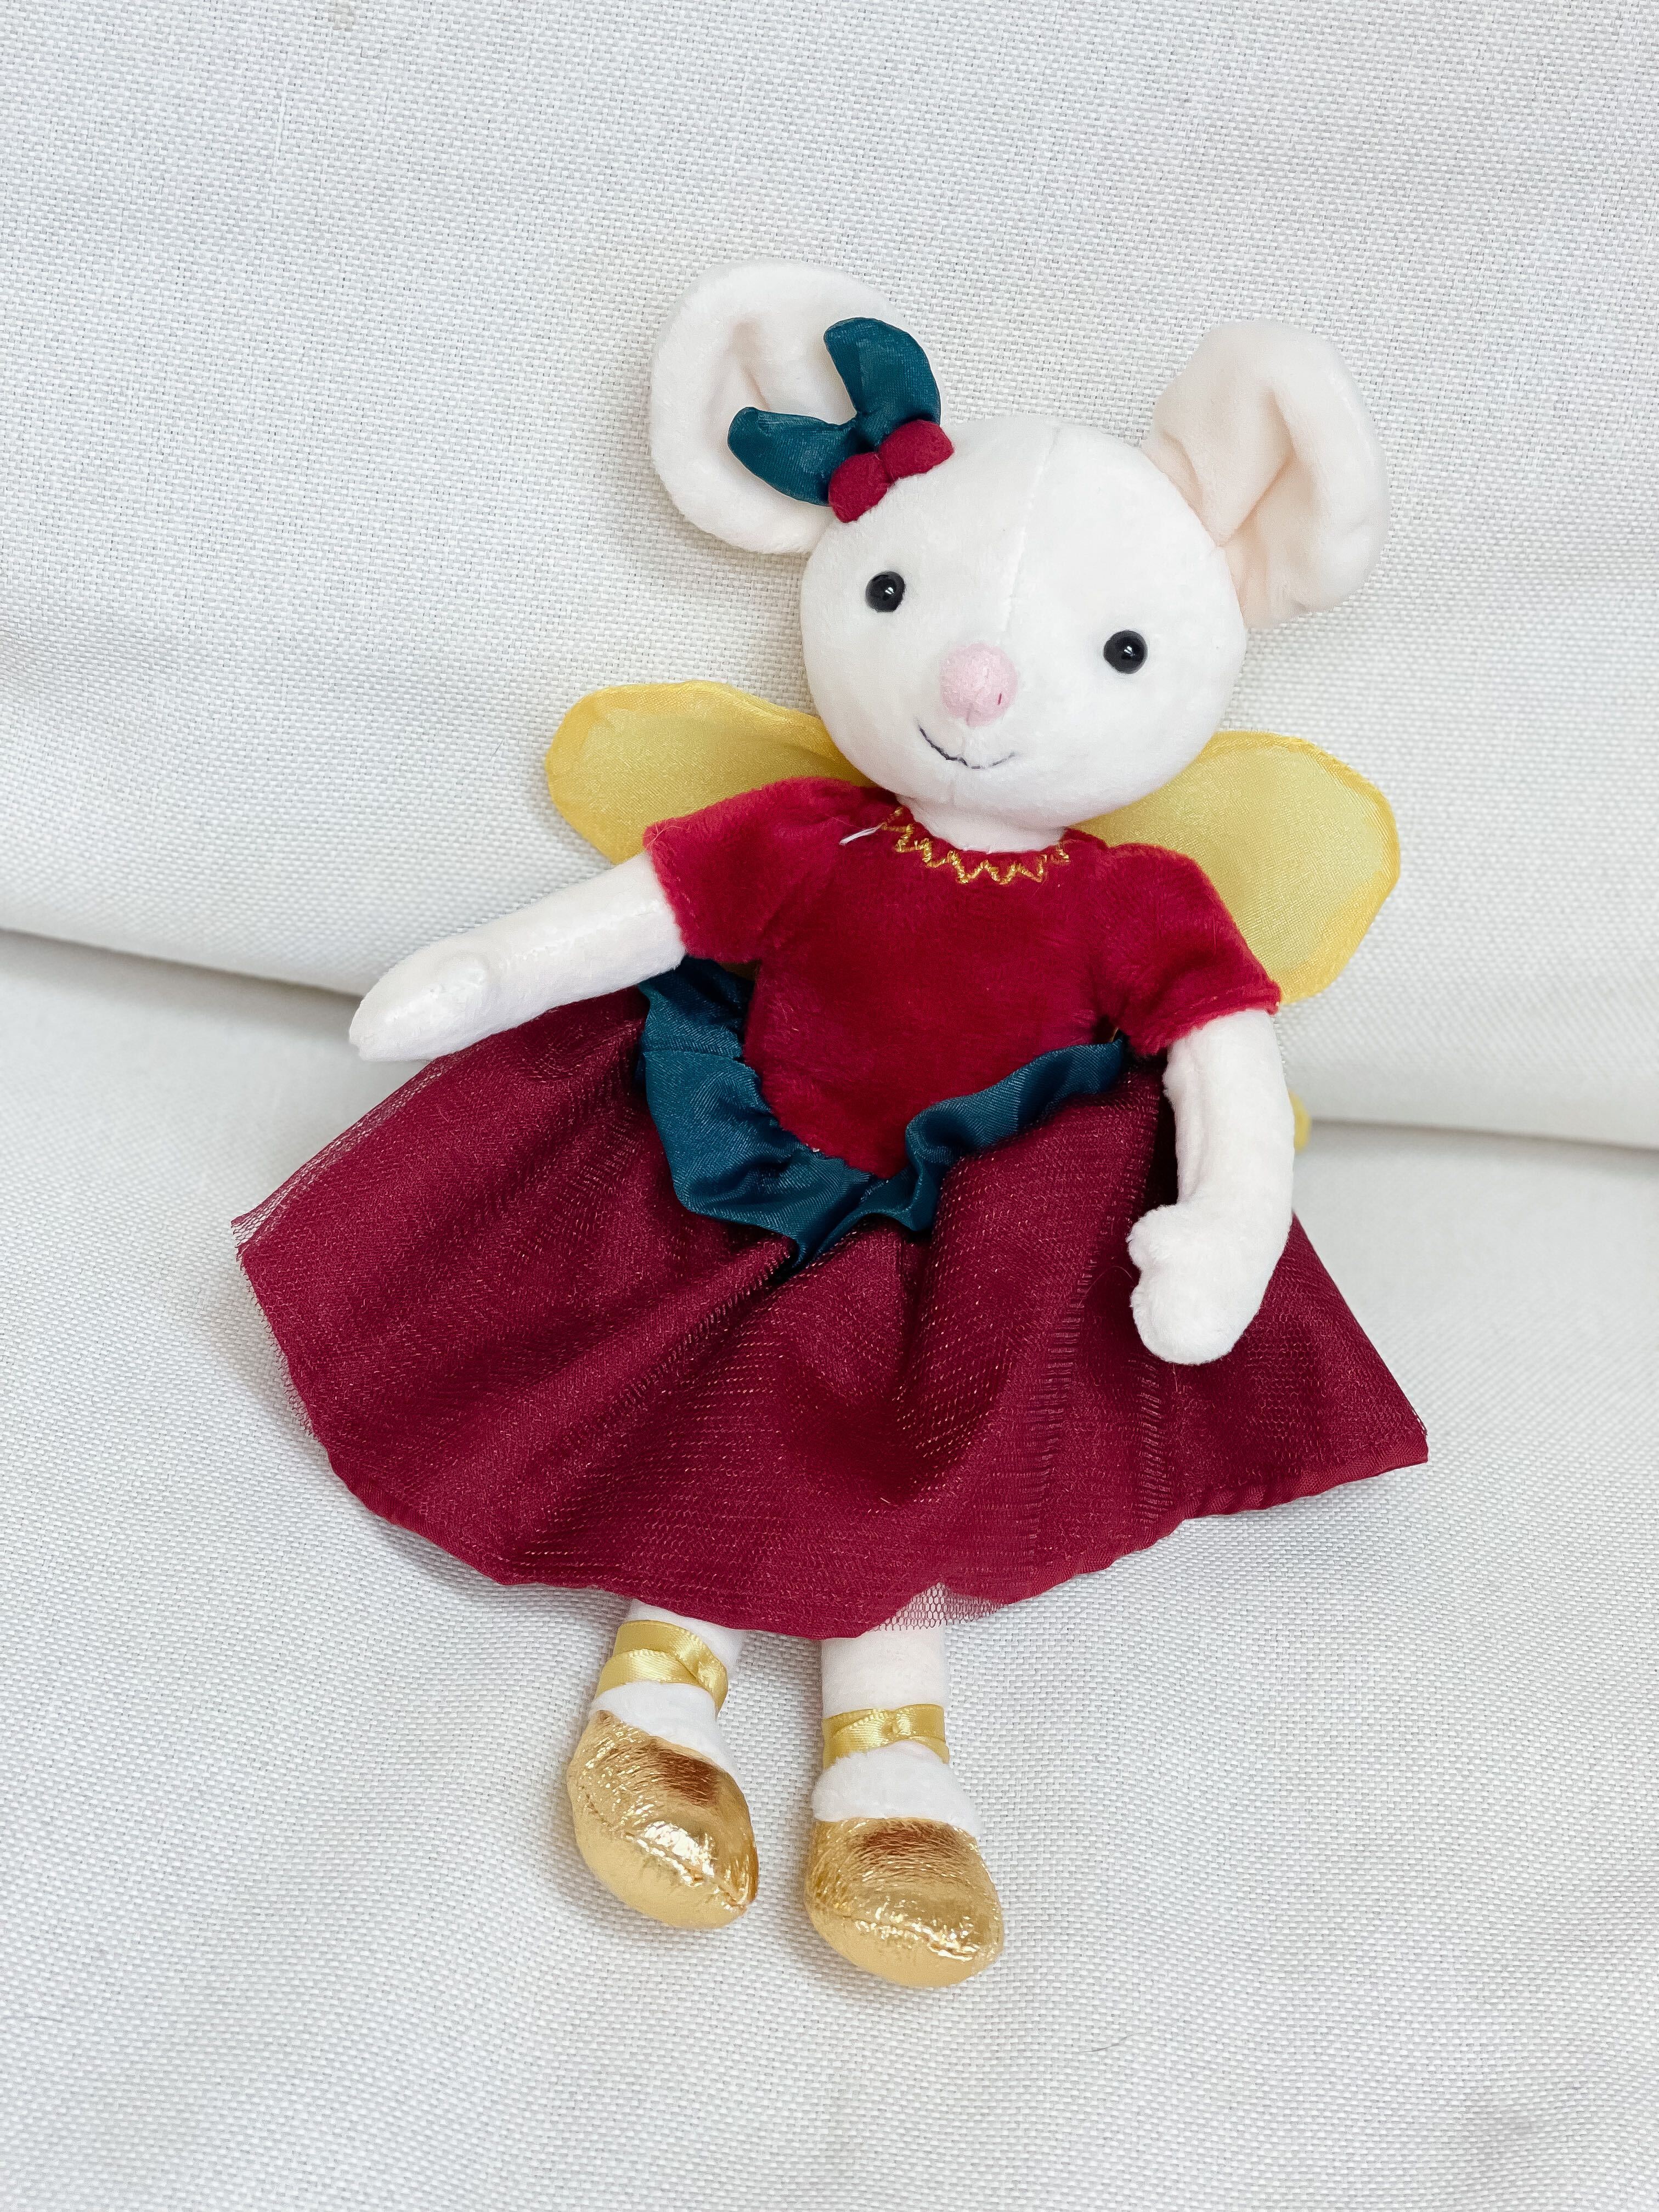 Sugar Plum Fairy Mouse Stuffed Animal by Jellycat